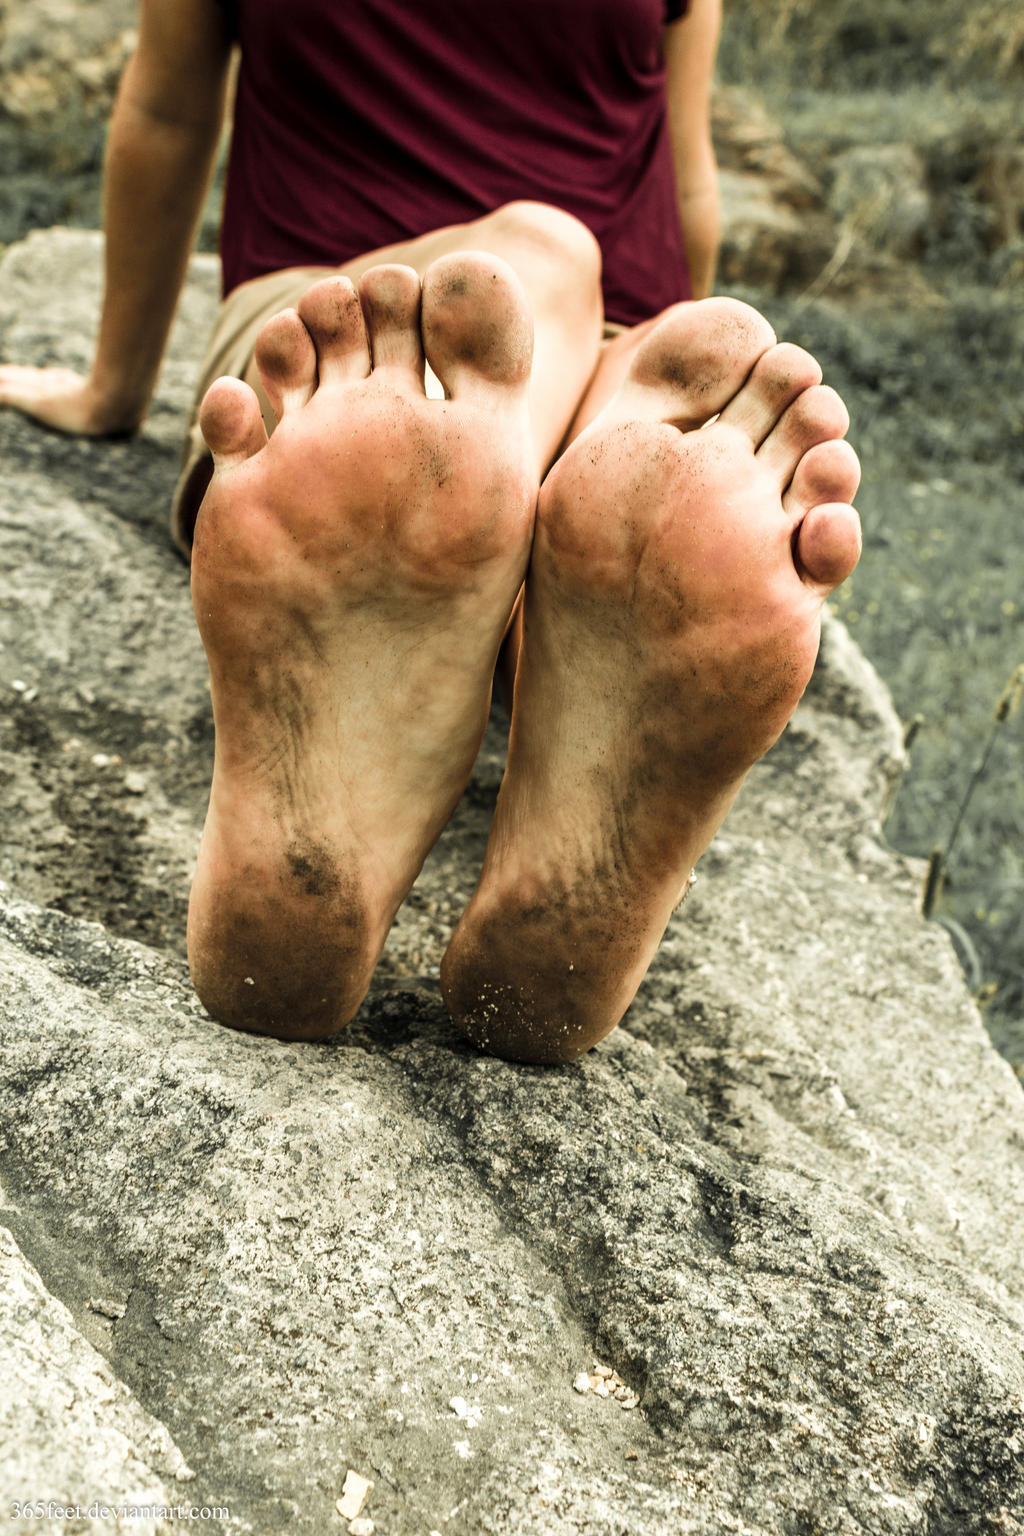 Her Feet on a Rock by 365feet on DeviantArt